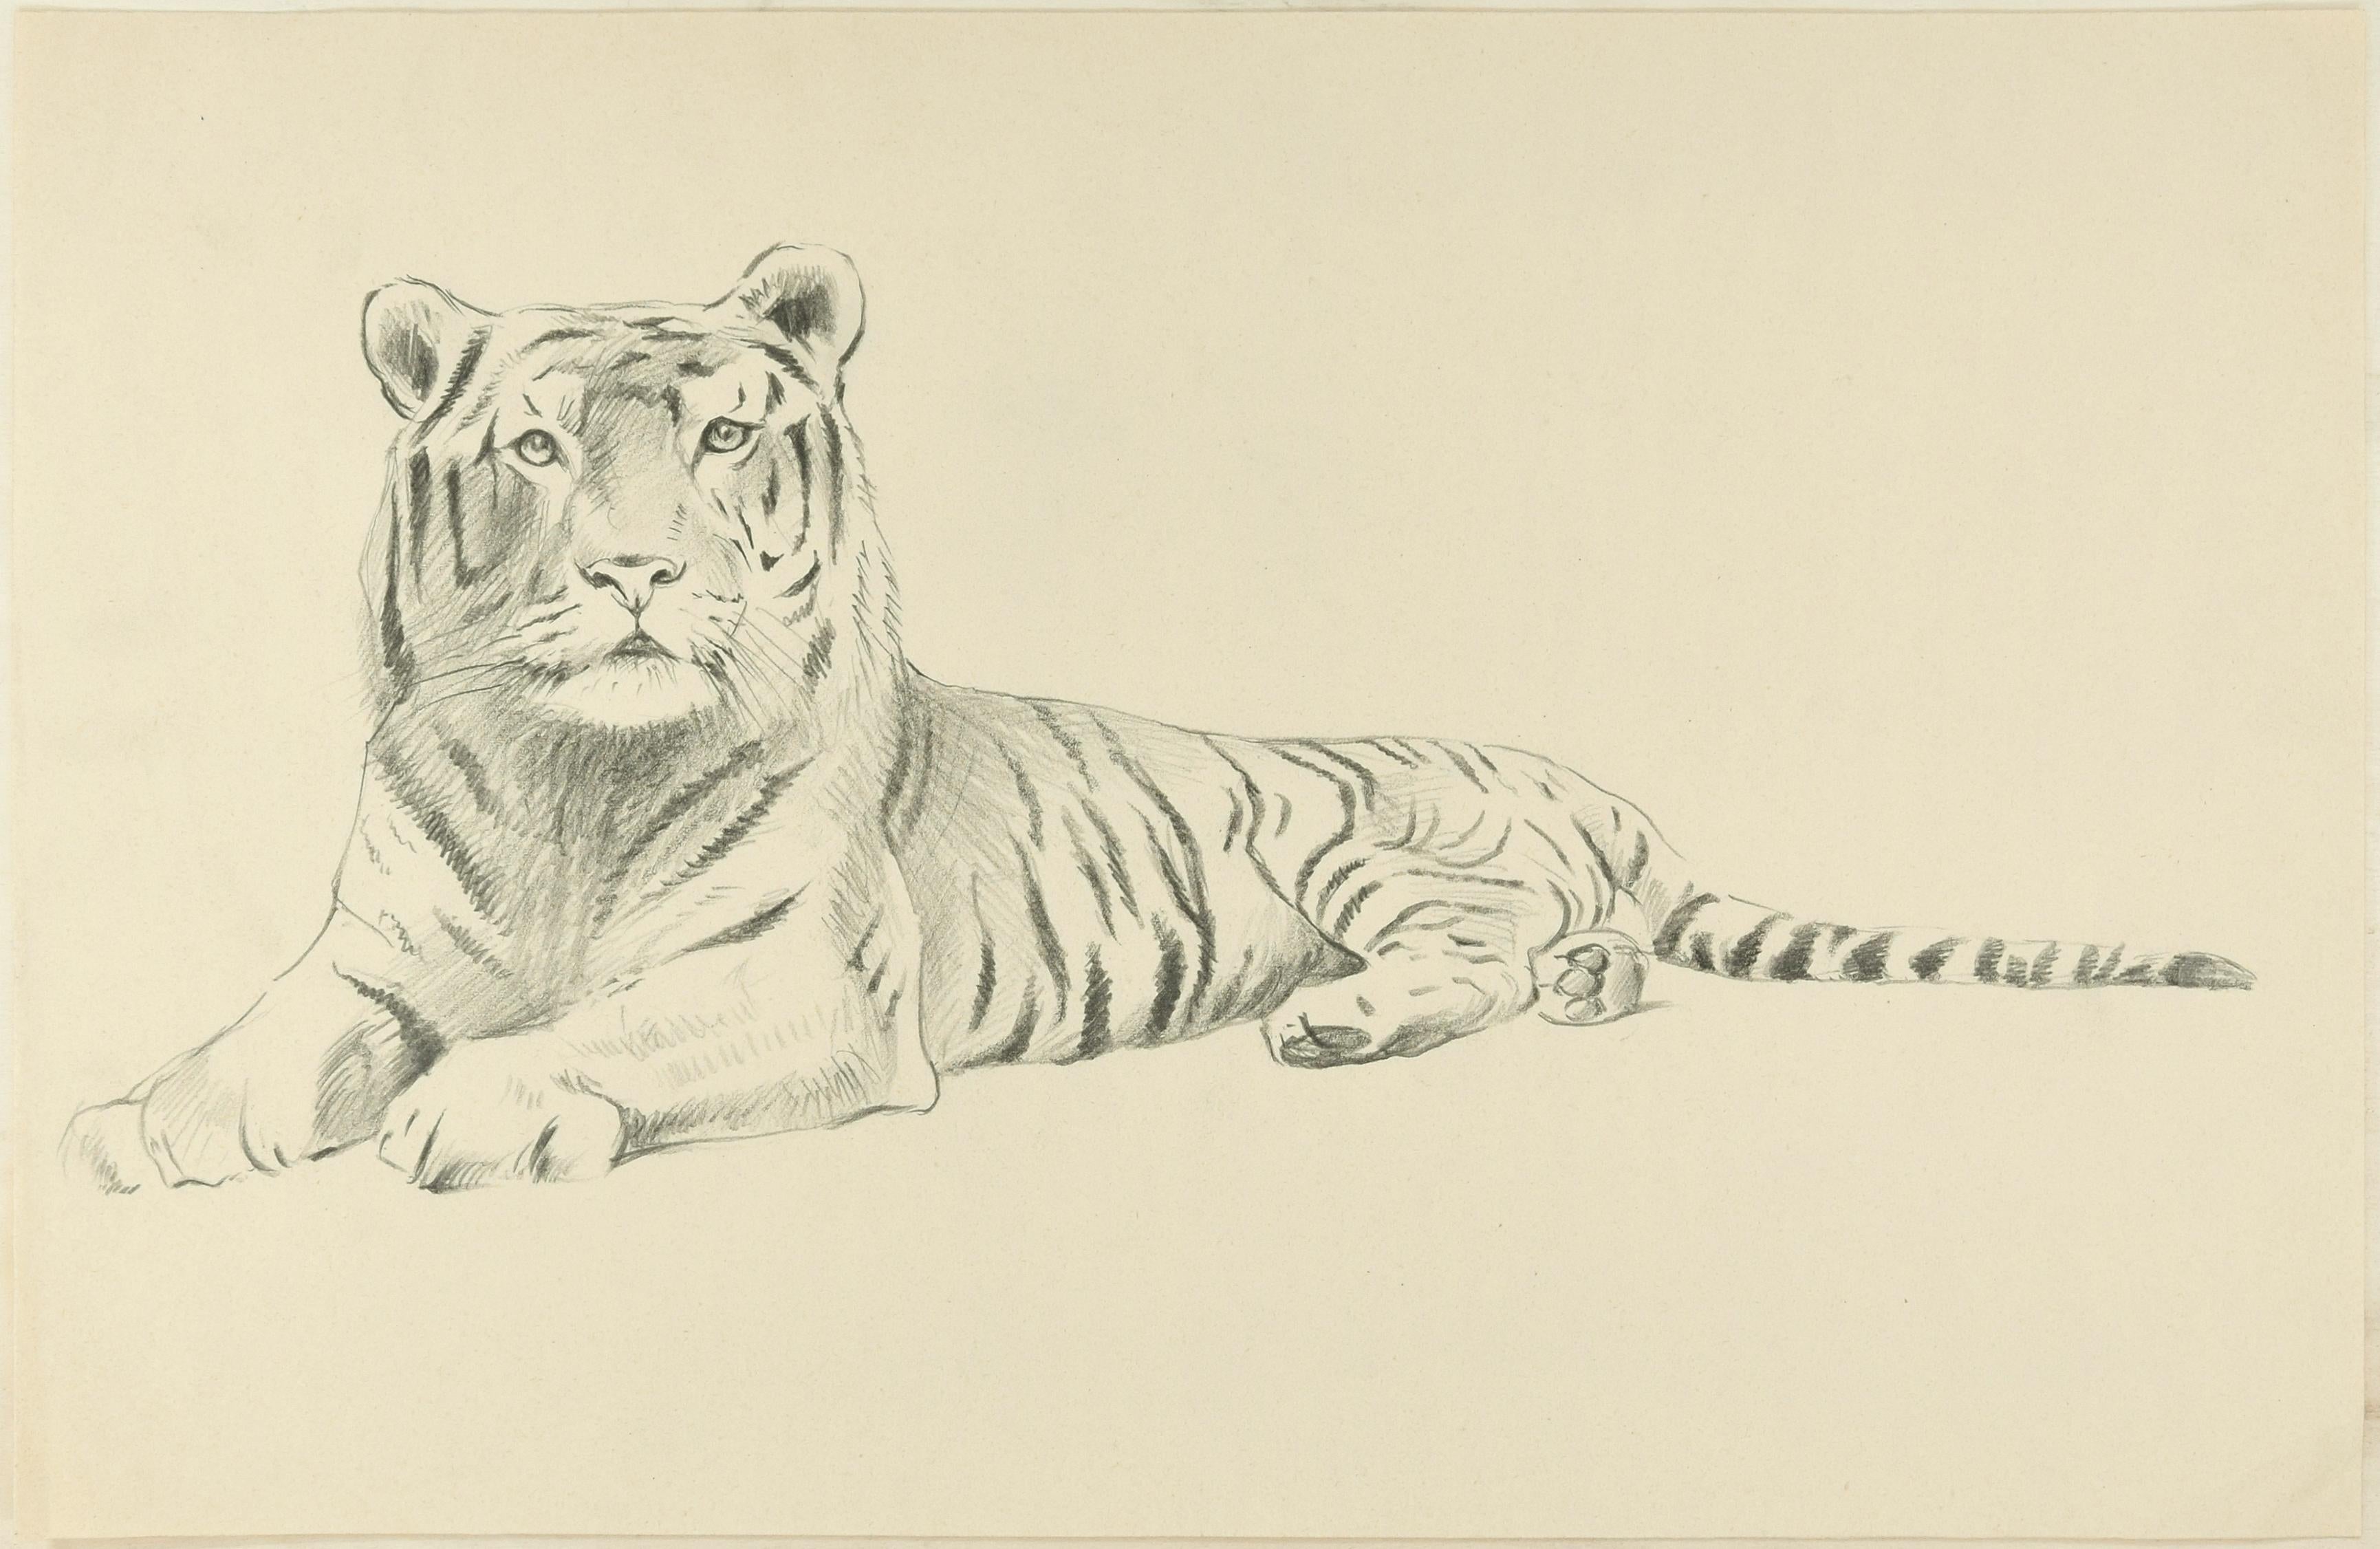 Figurative Art Wilhelm Lorenz - Croquis d'un tigre - dessin original au crayon de Willy Lorenz - années 1950